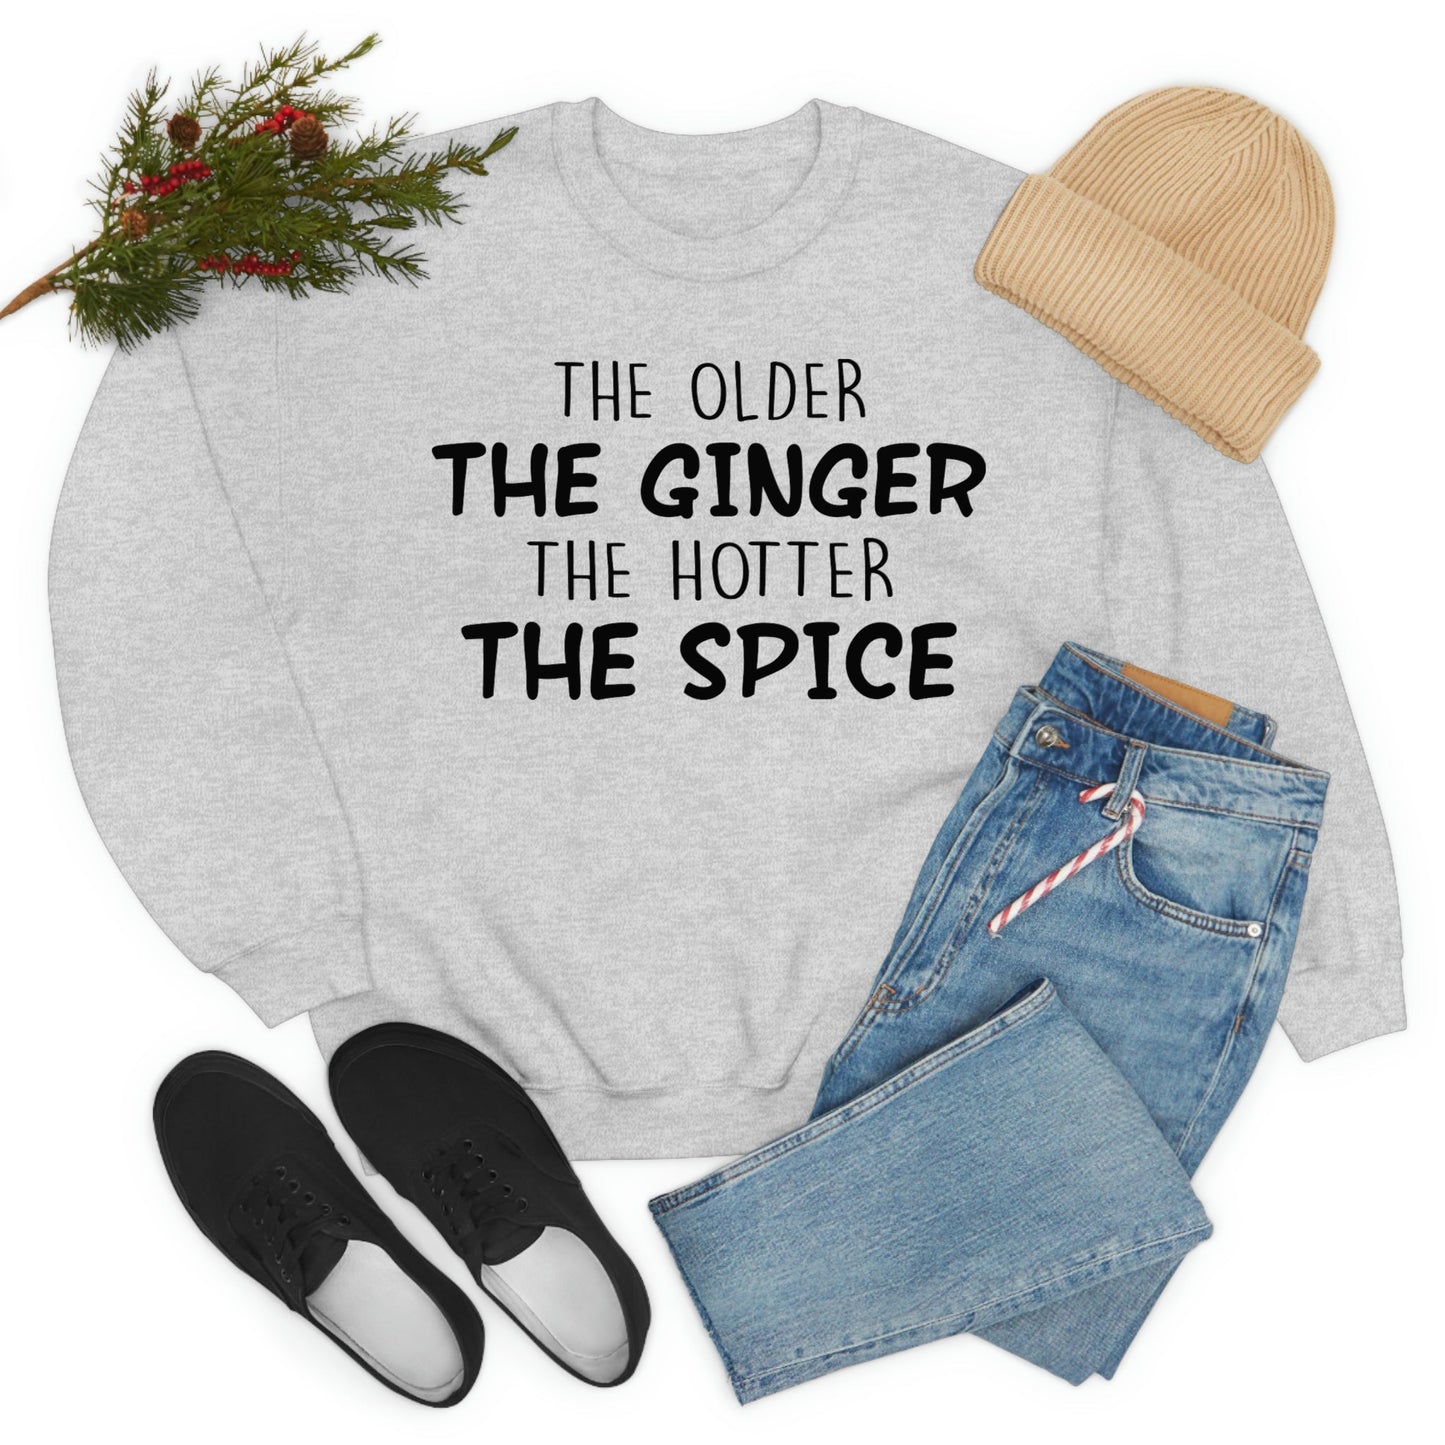 The Older the Ginger